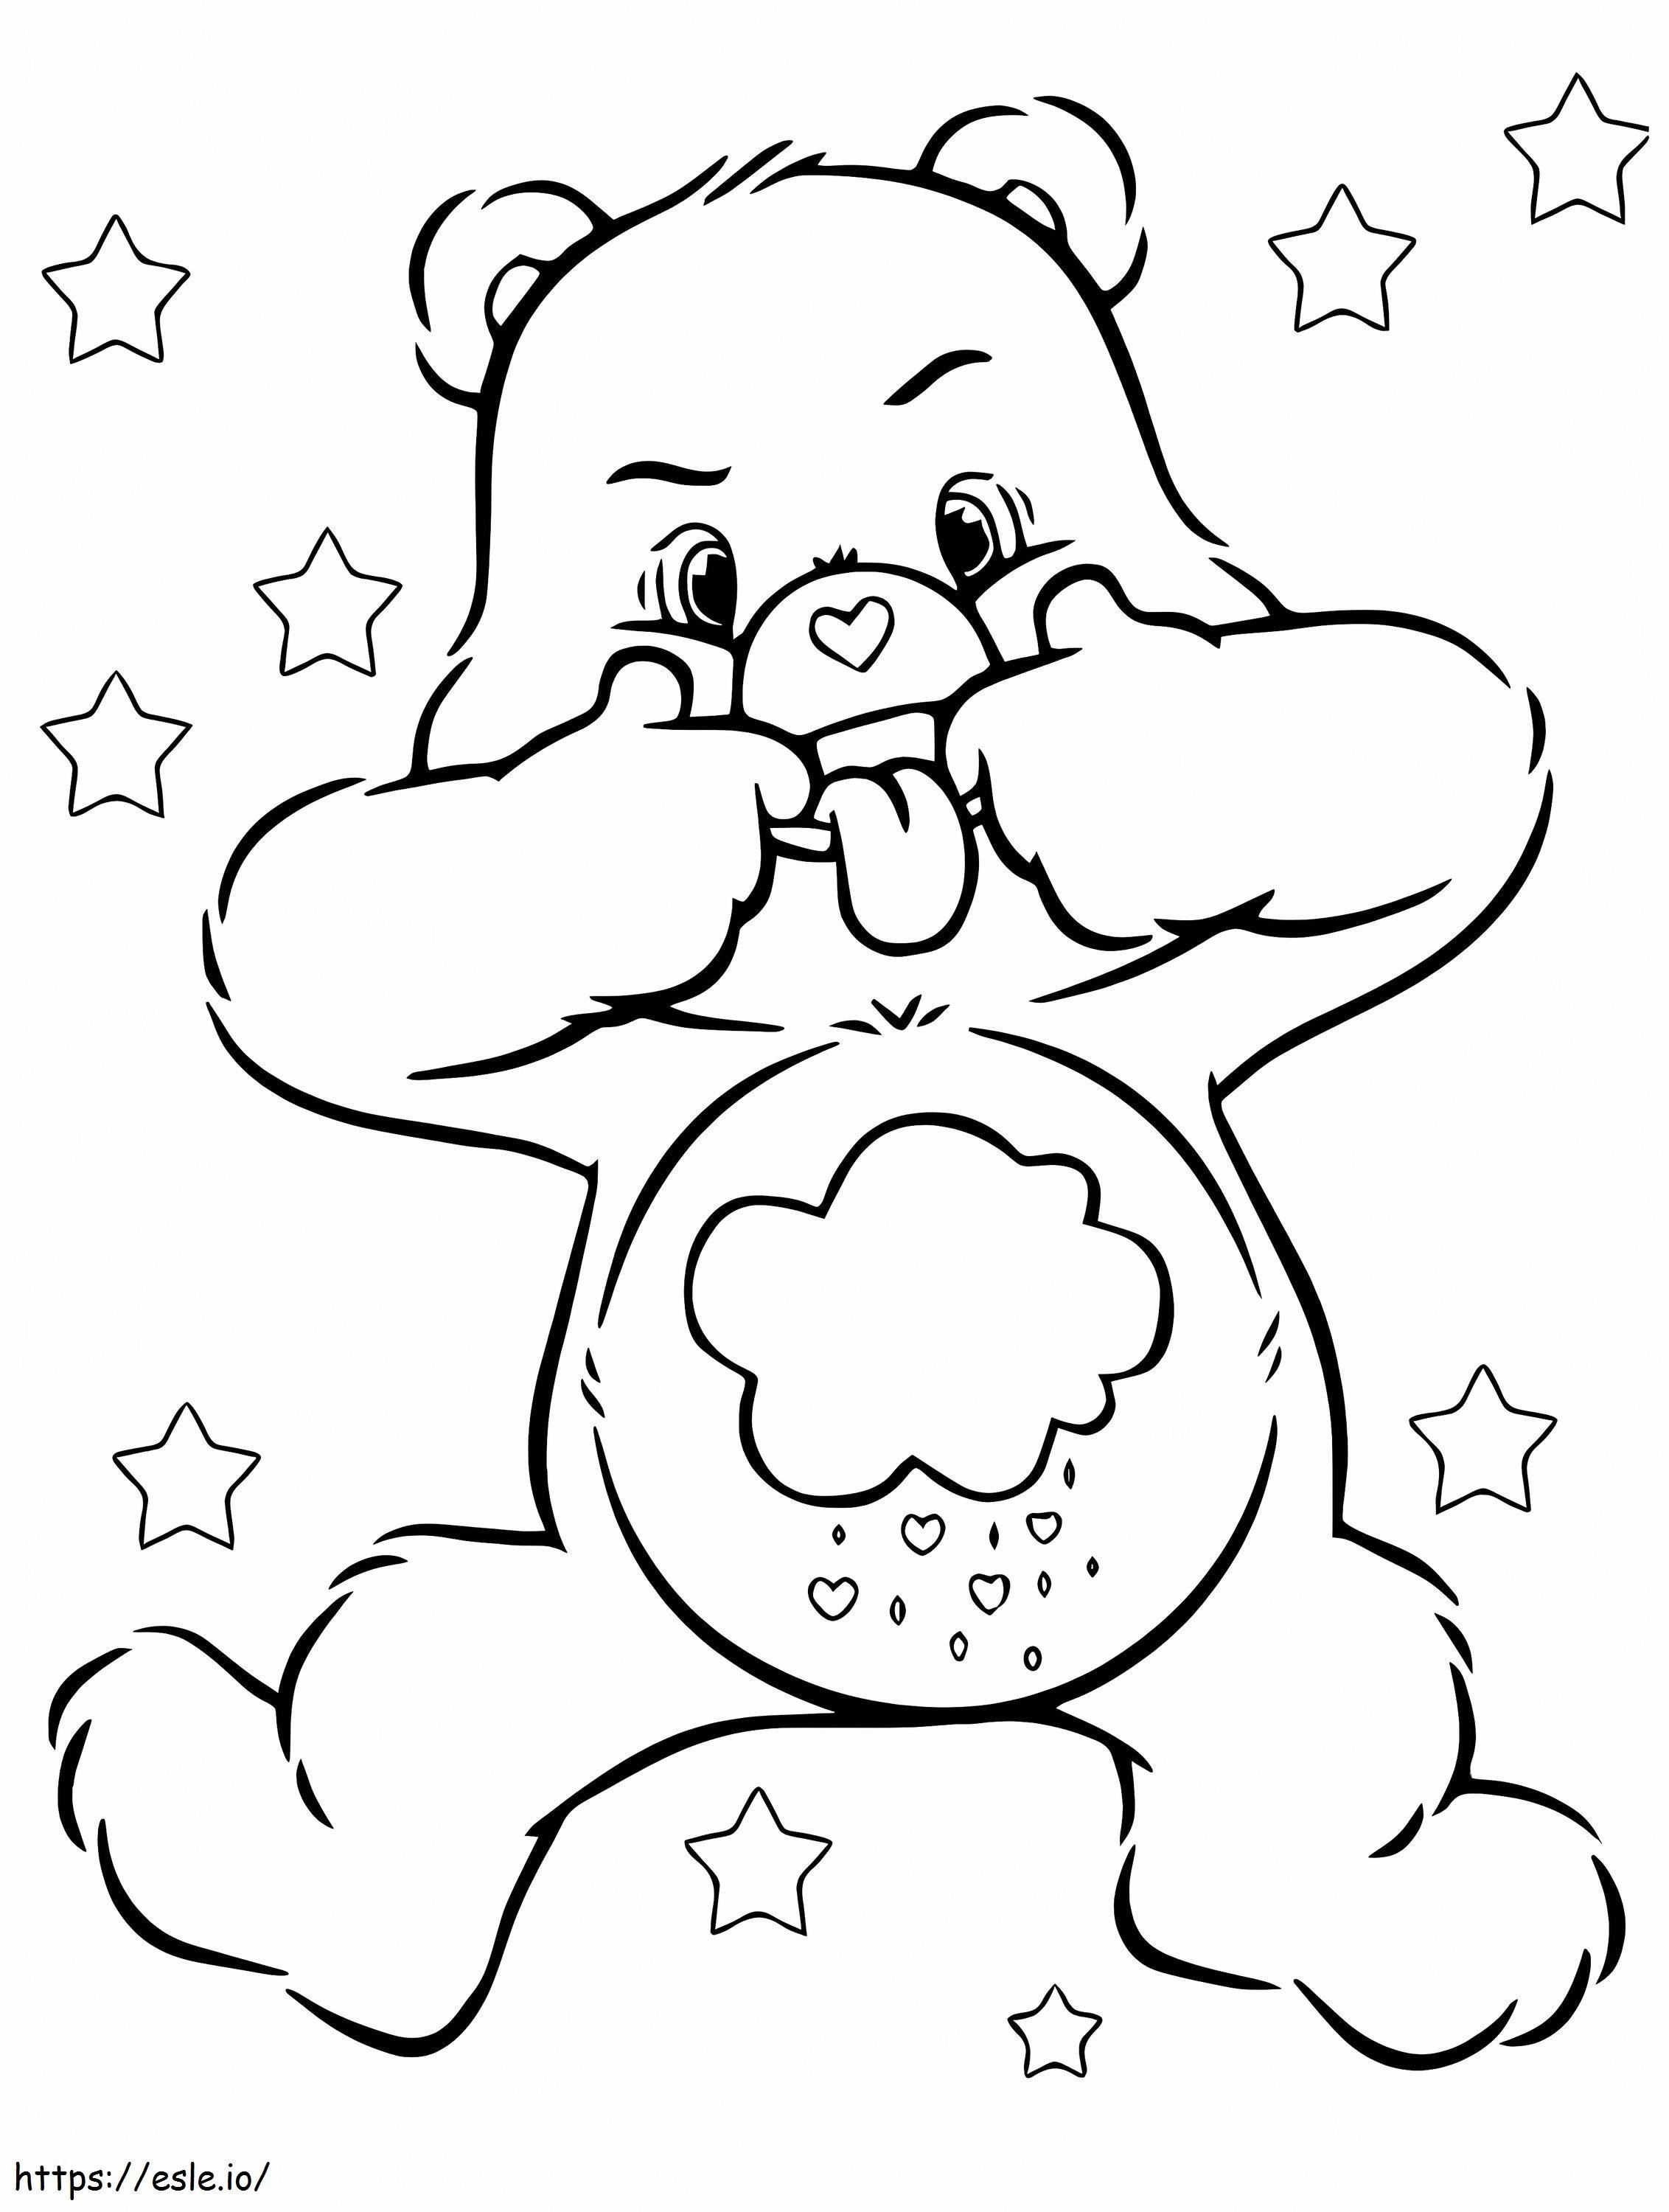 Grumpy Bear 2 coloring page